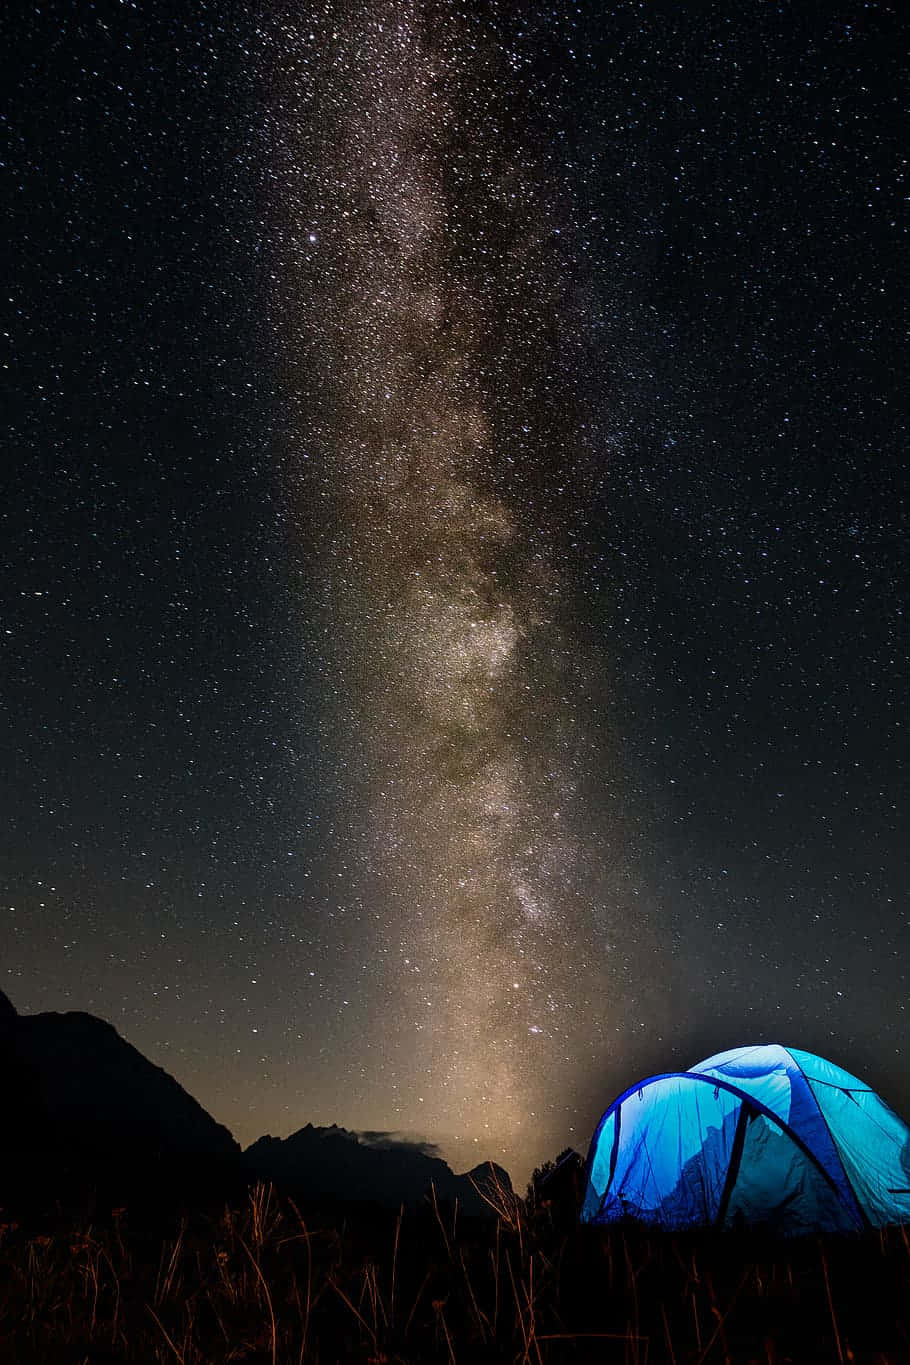 Friends Tent Starry Night Wallpaper